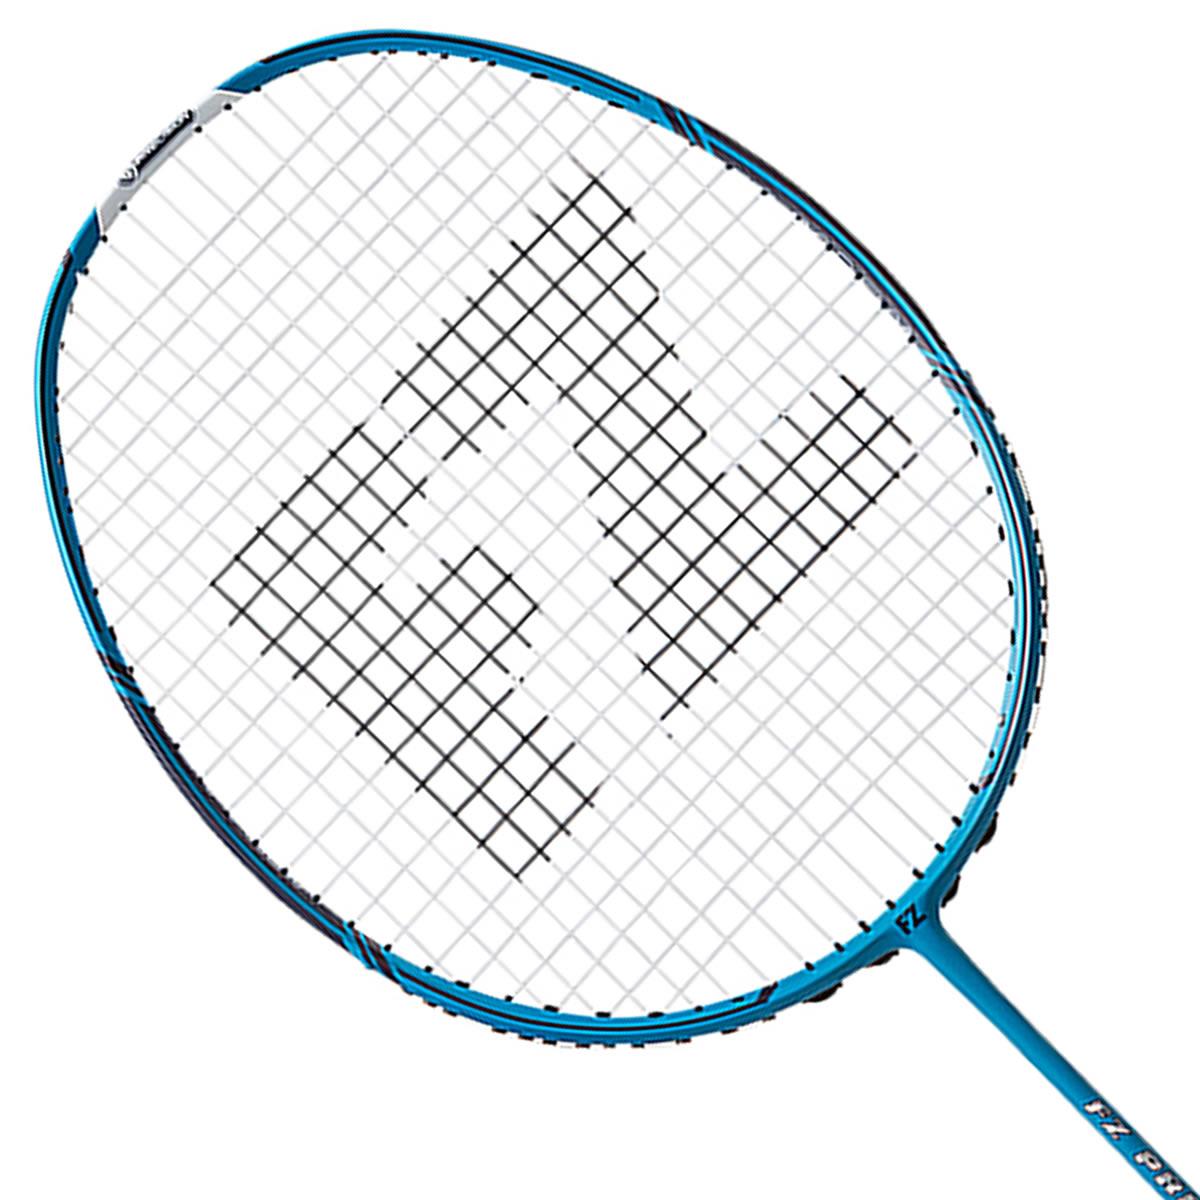 FZ Forza Precision 4000 Badminton Racket - Blue